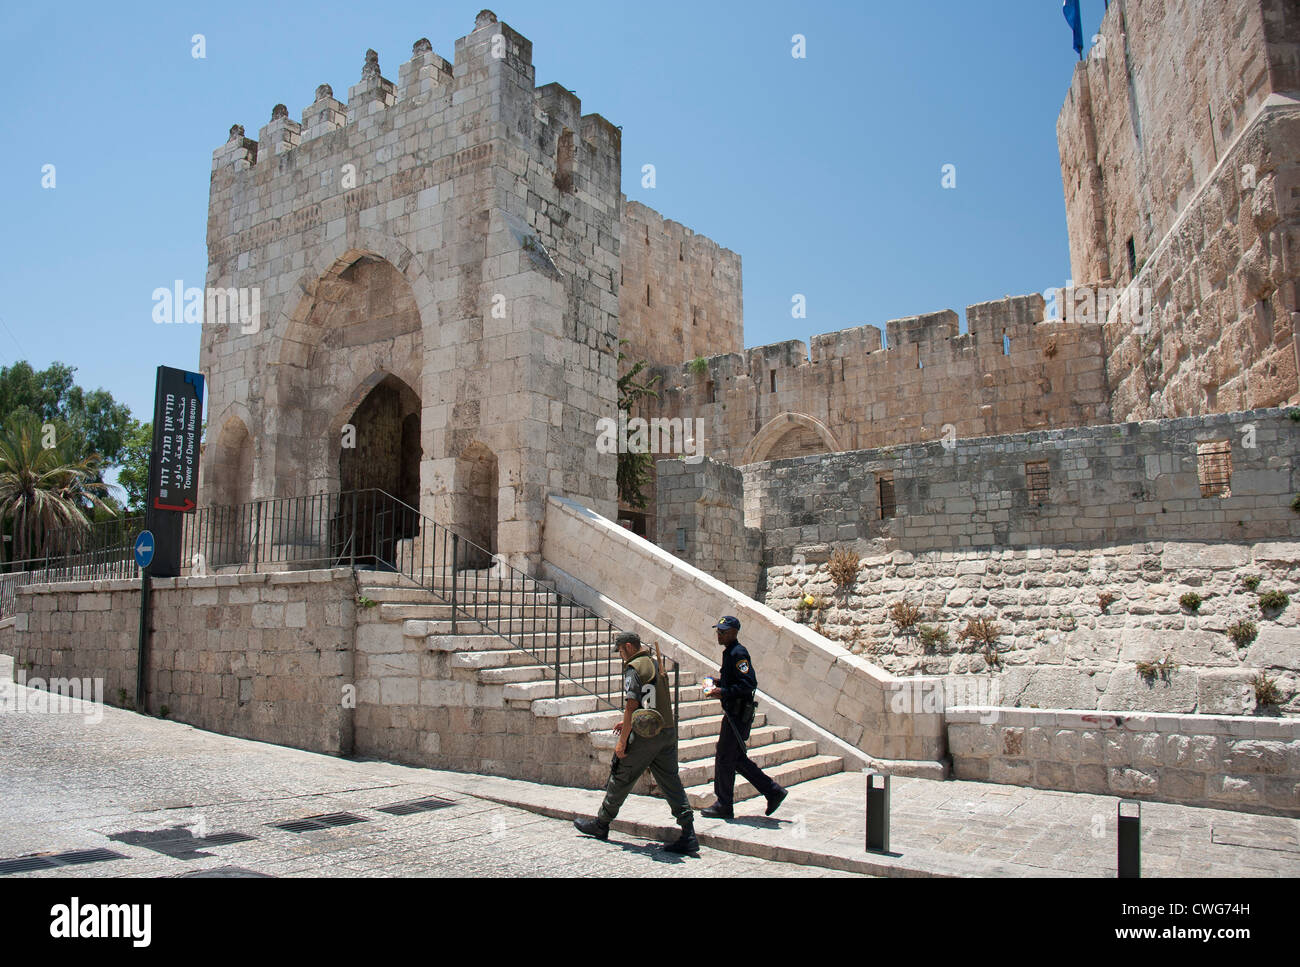 La torre di Davide, Gerusalemme, Israele Foto Stock